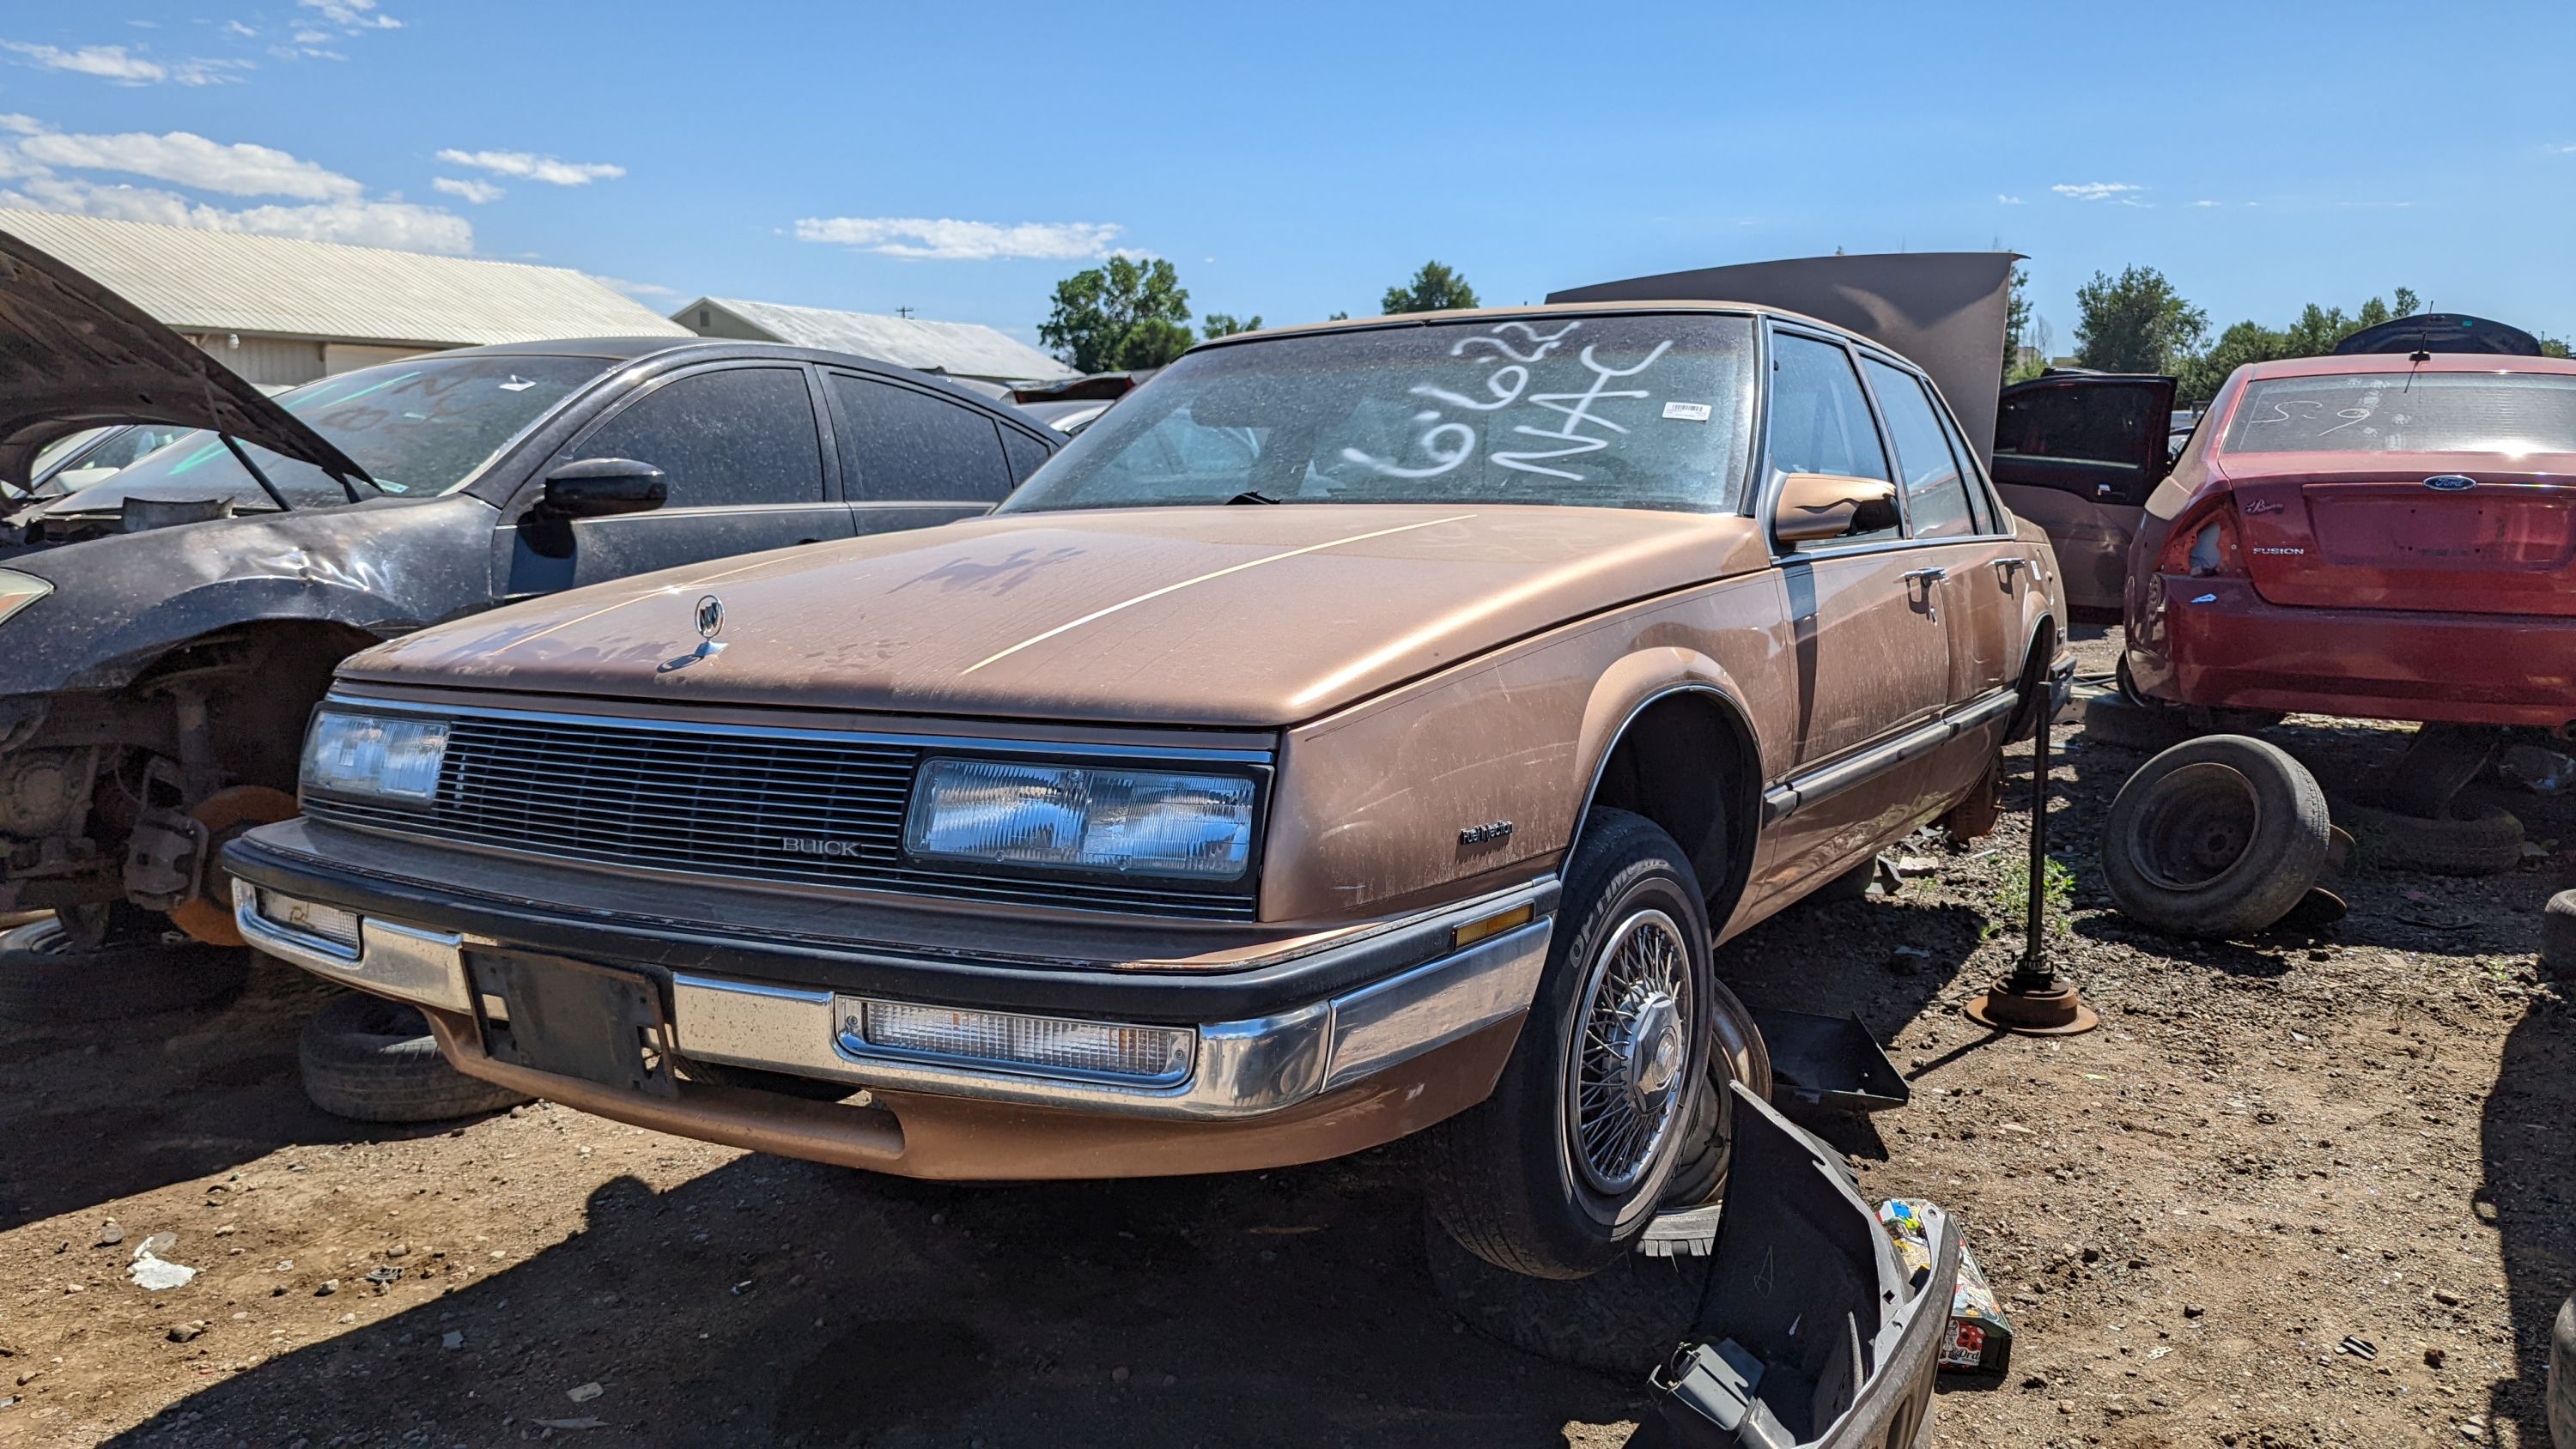 47 - 1988 Buick LeSabre in Colorado junkyard - Photo by Murilee Martin